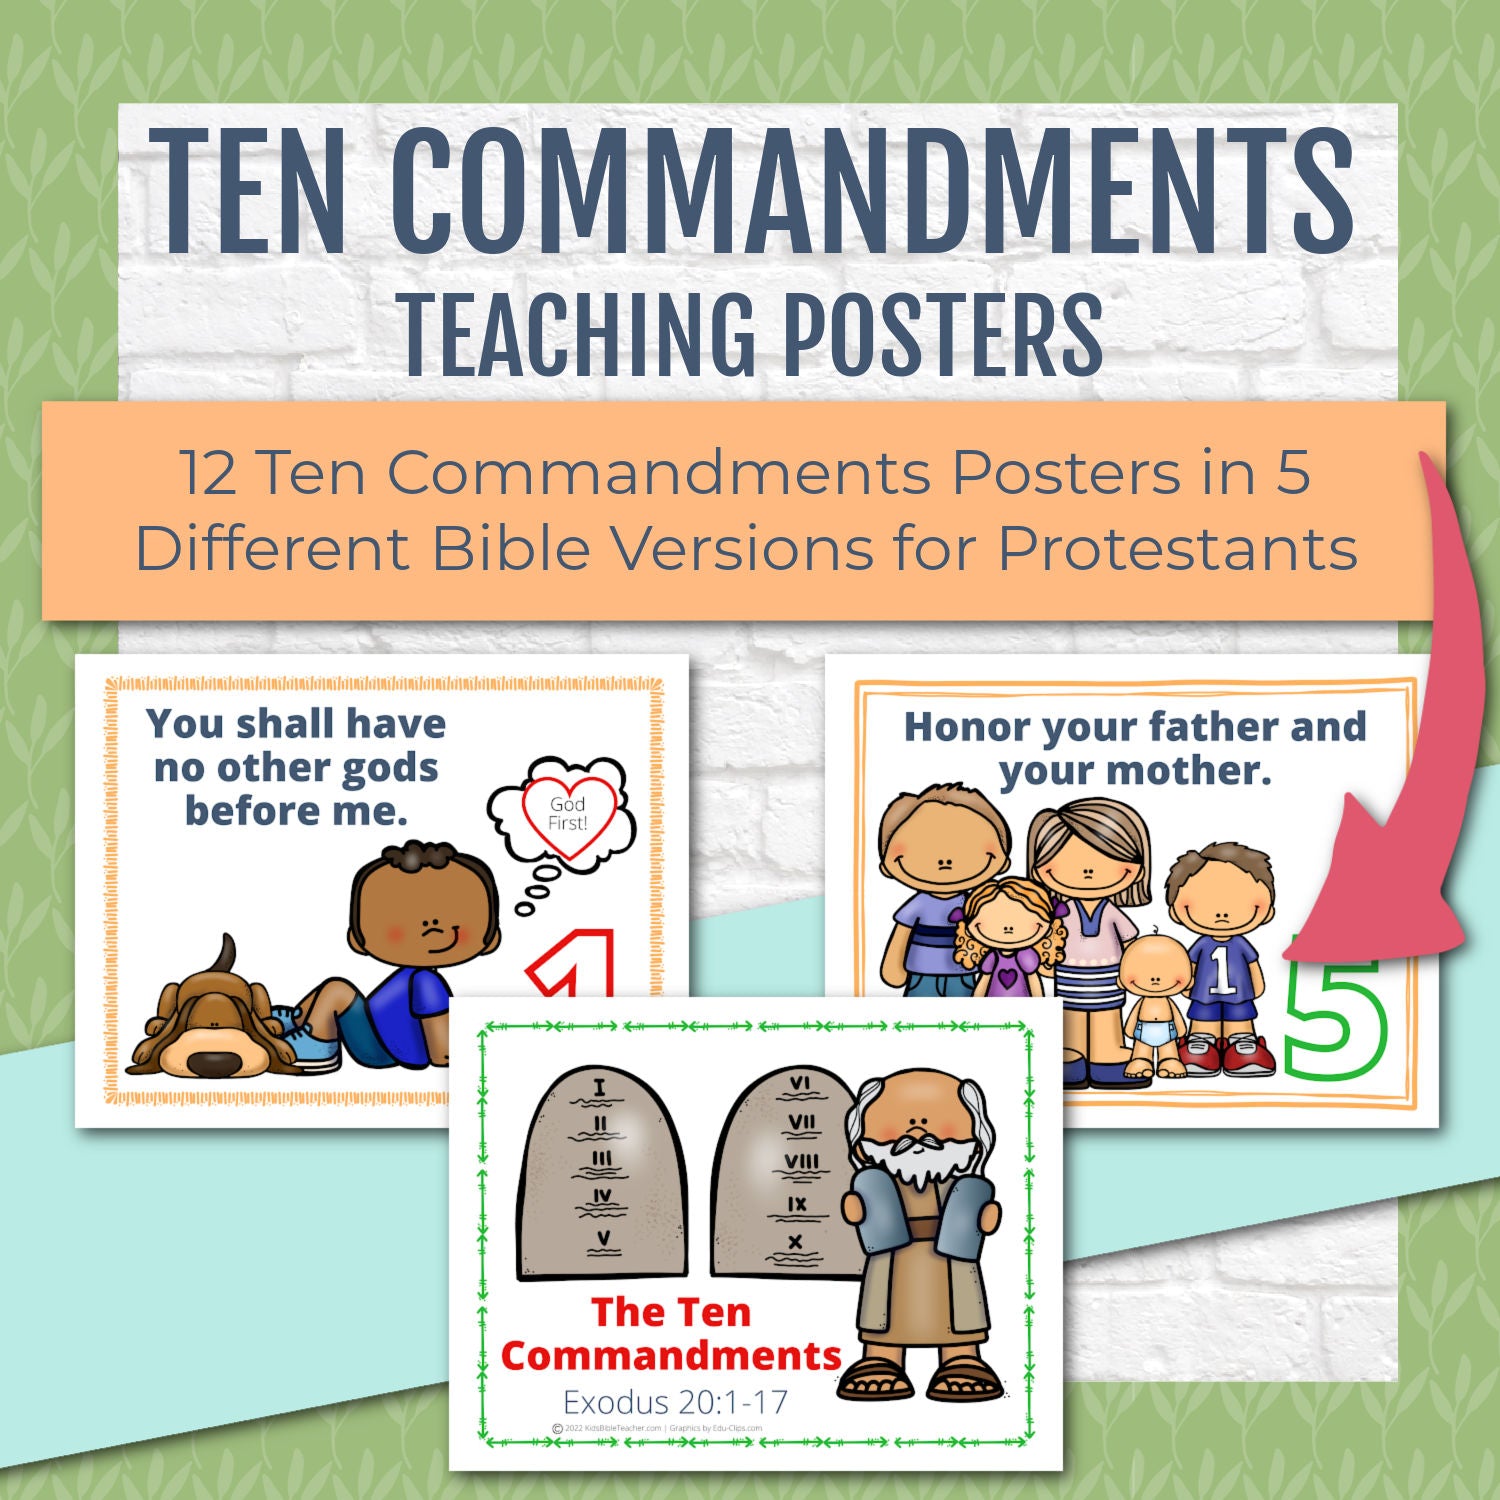 Ten Commandments Printable Bundle